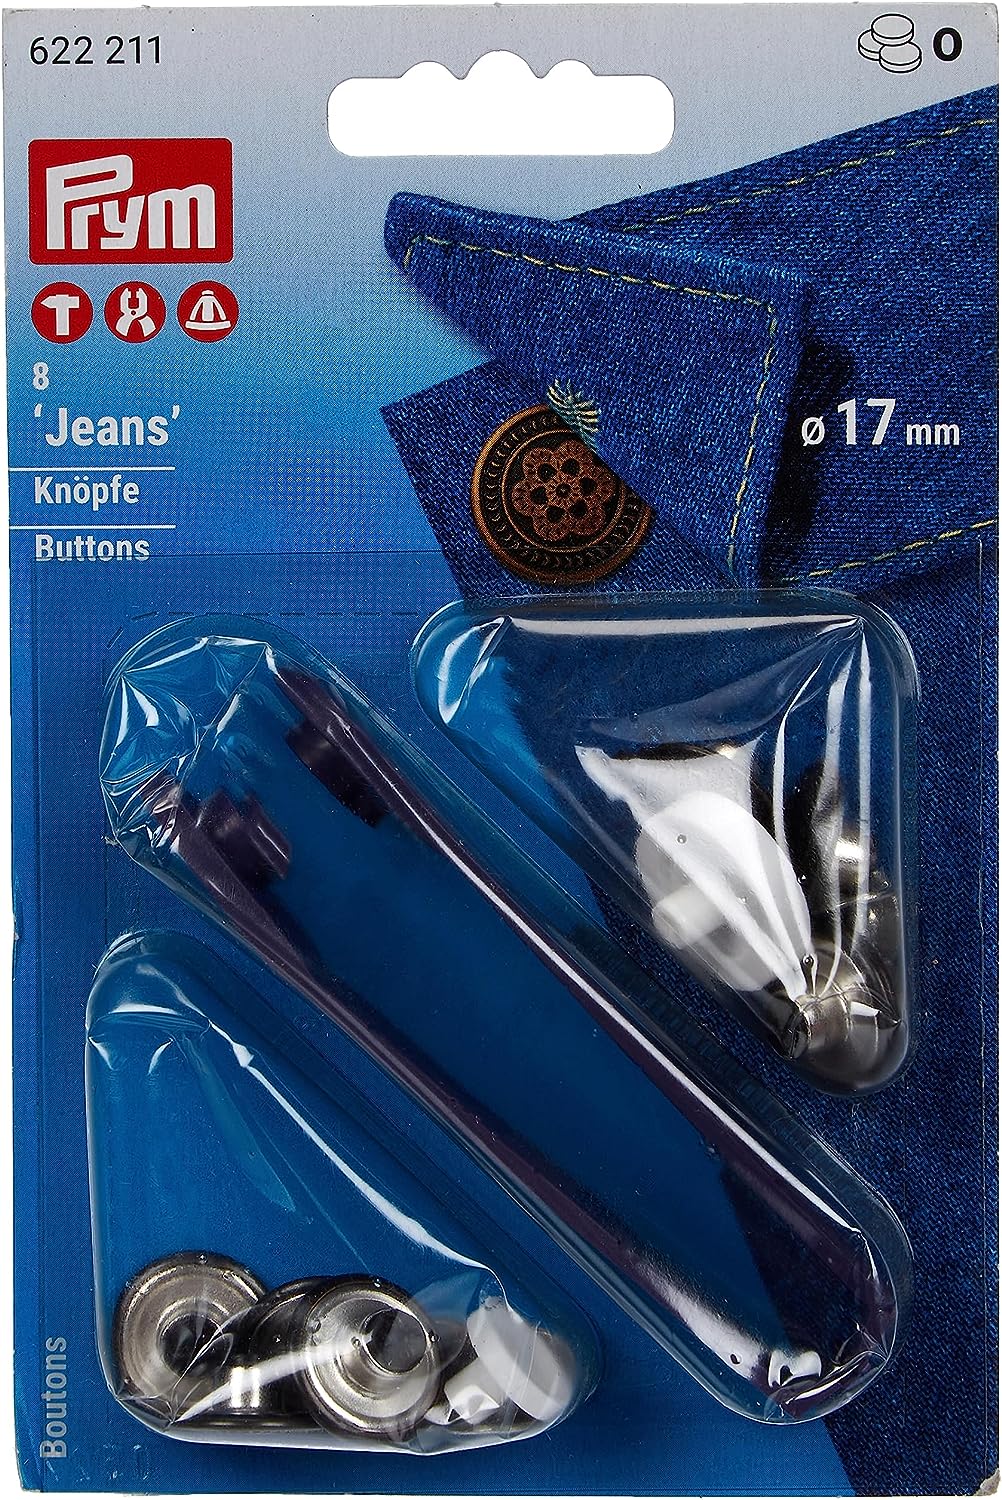 PRM622211 Prym Jeans Top Button "Flower" w/Kit 17mm dia. 8 pairs Black Nickel 622211 (pcs)